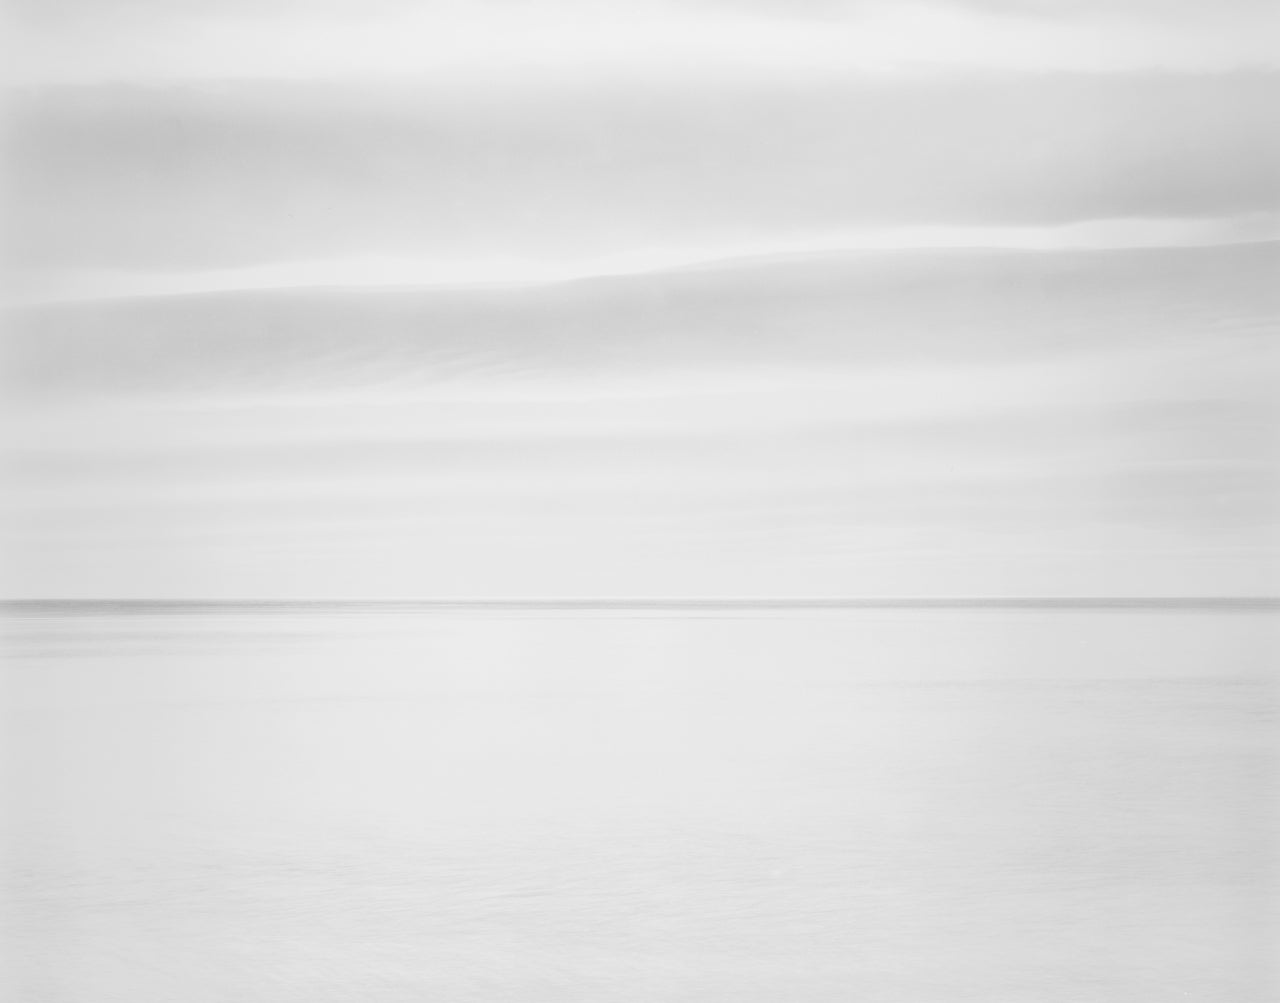 Chip Hooper Black and White Photograph - Sunrise, Tasman Sea